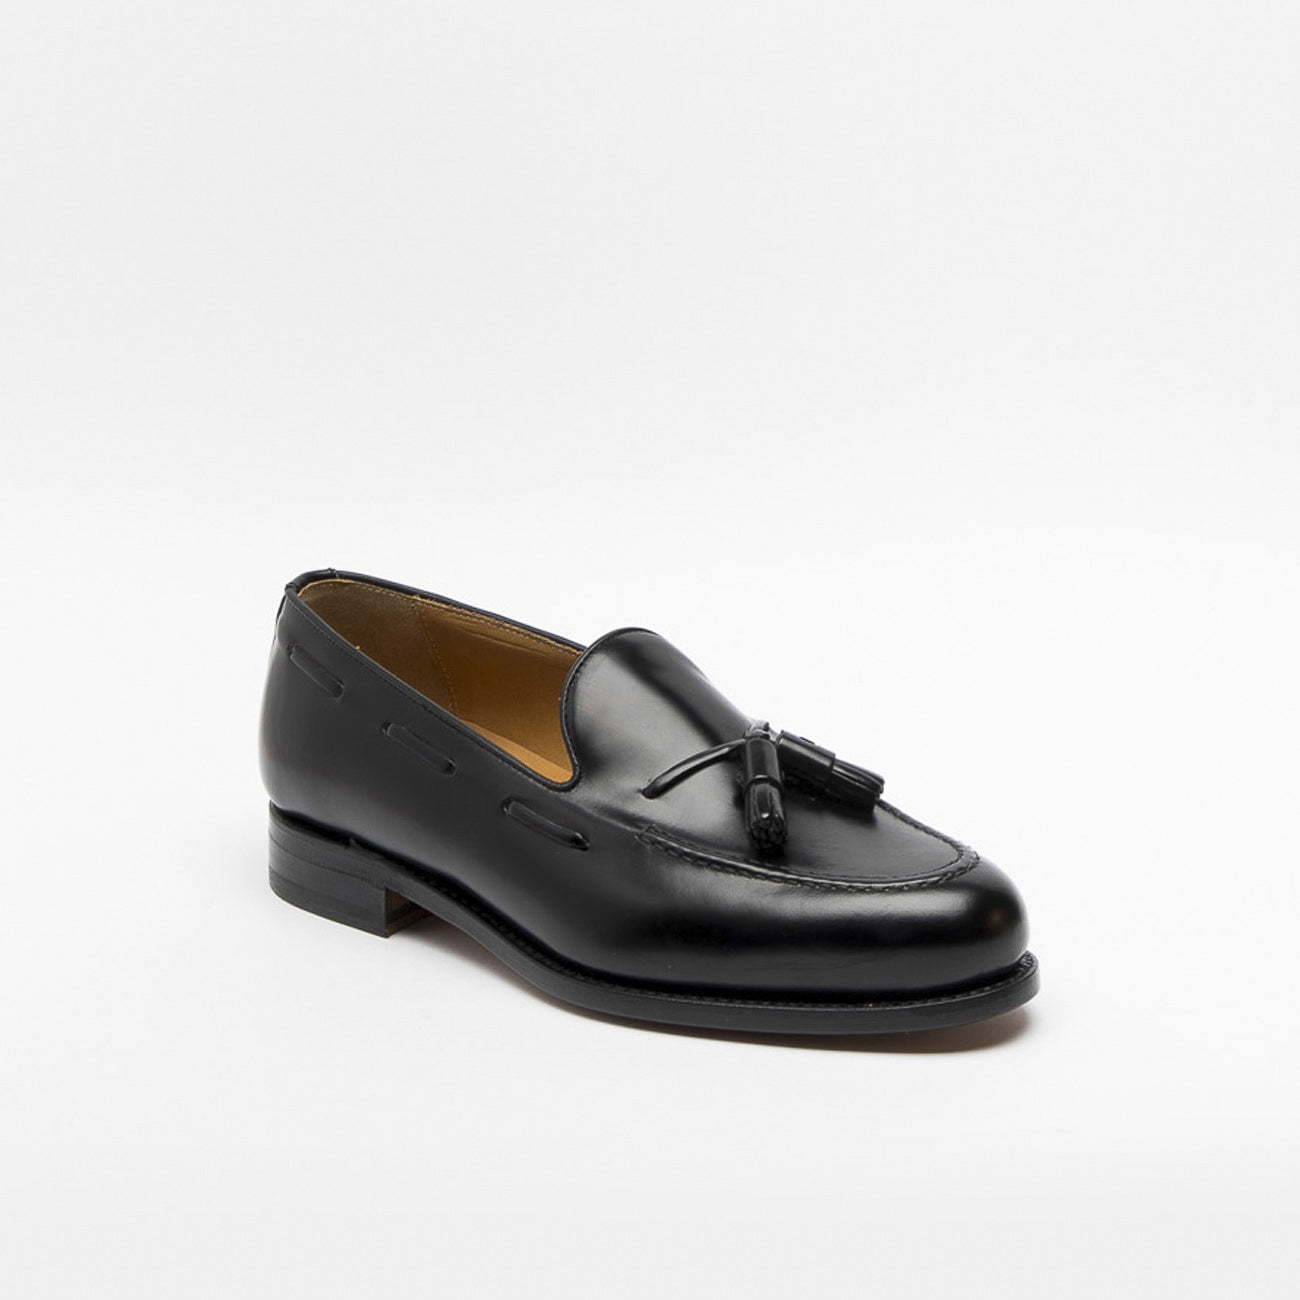 Berwick black leather tassel loafer